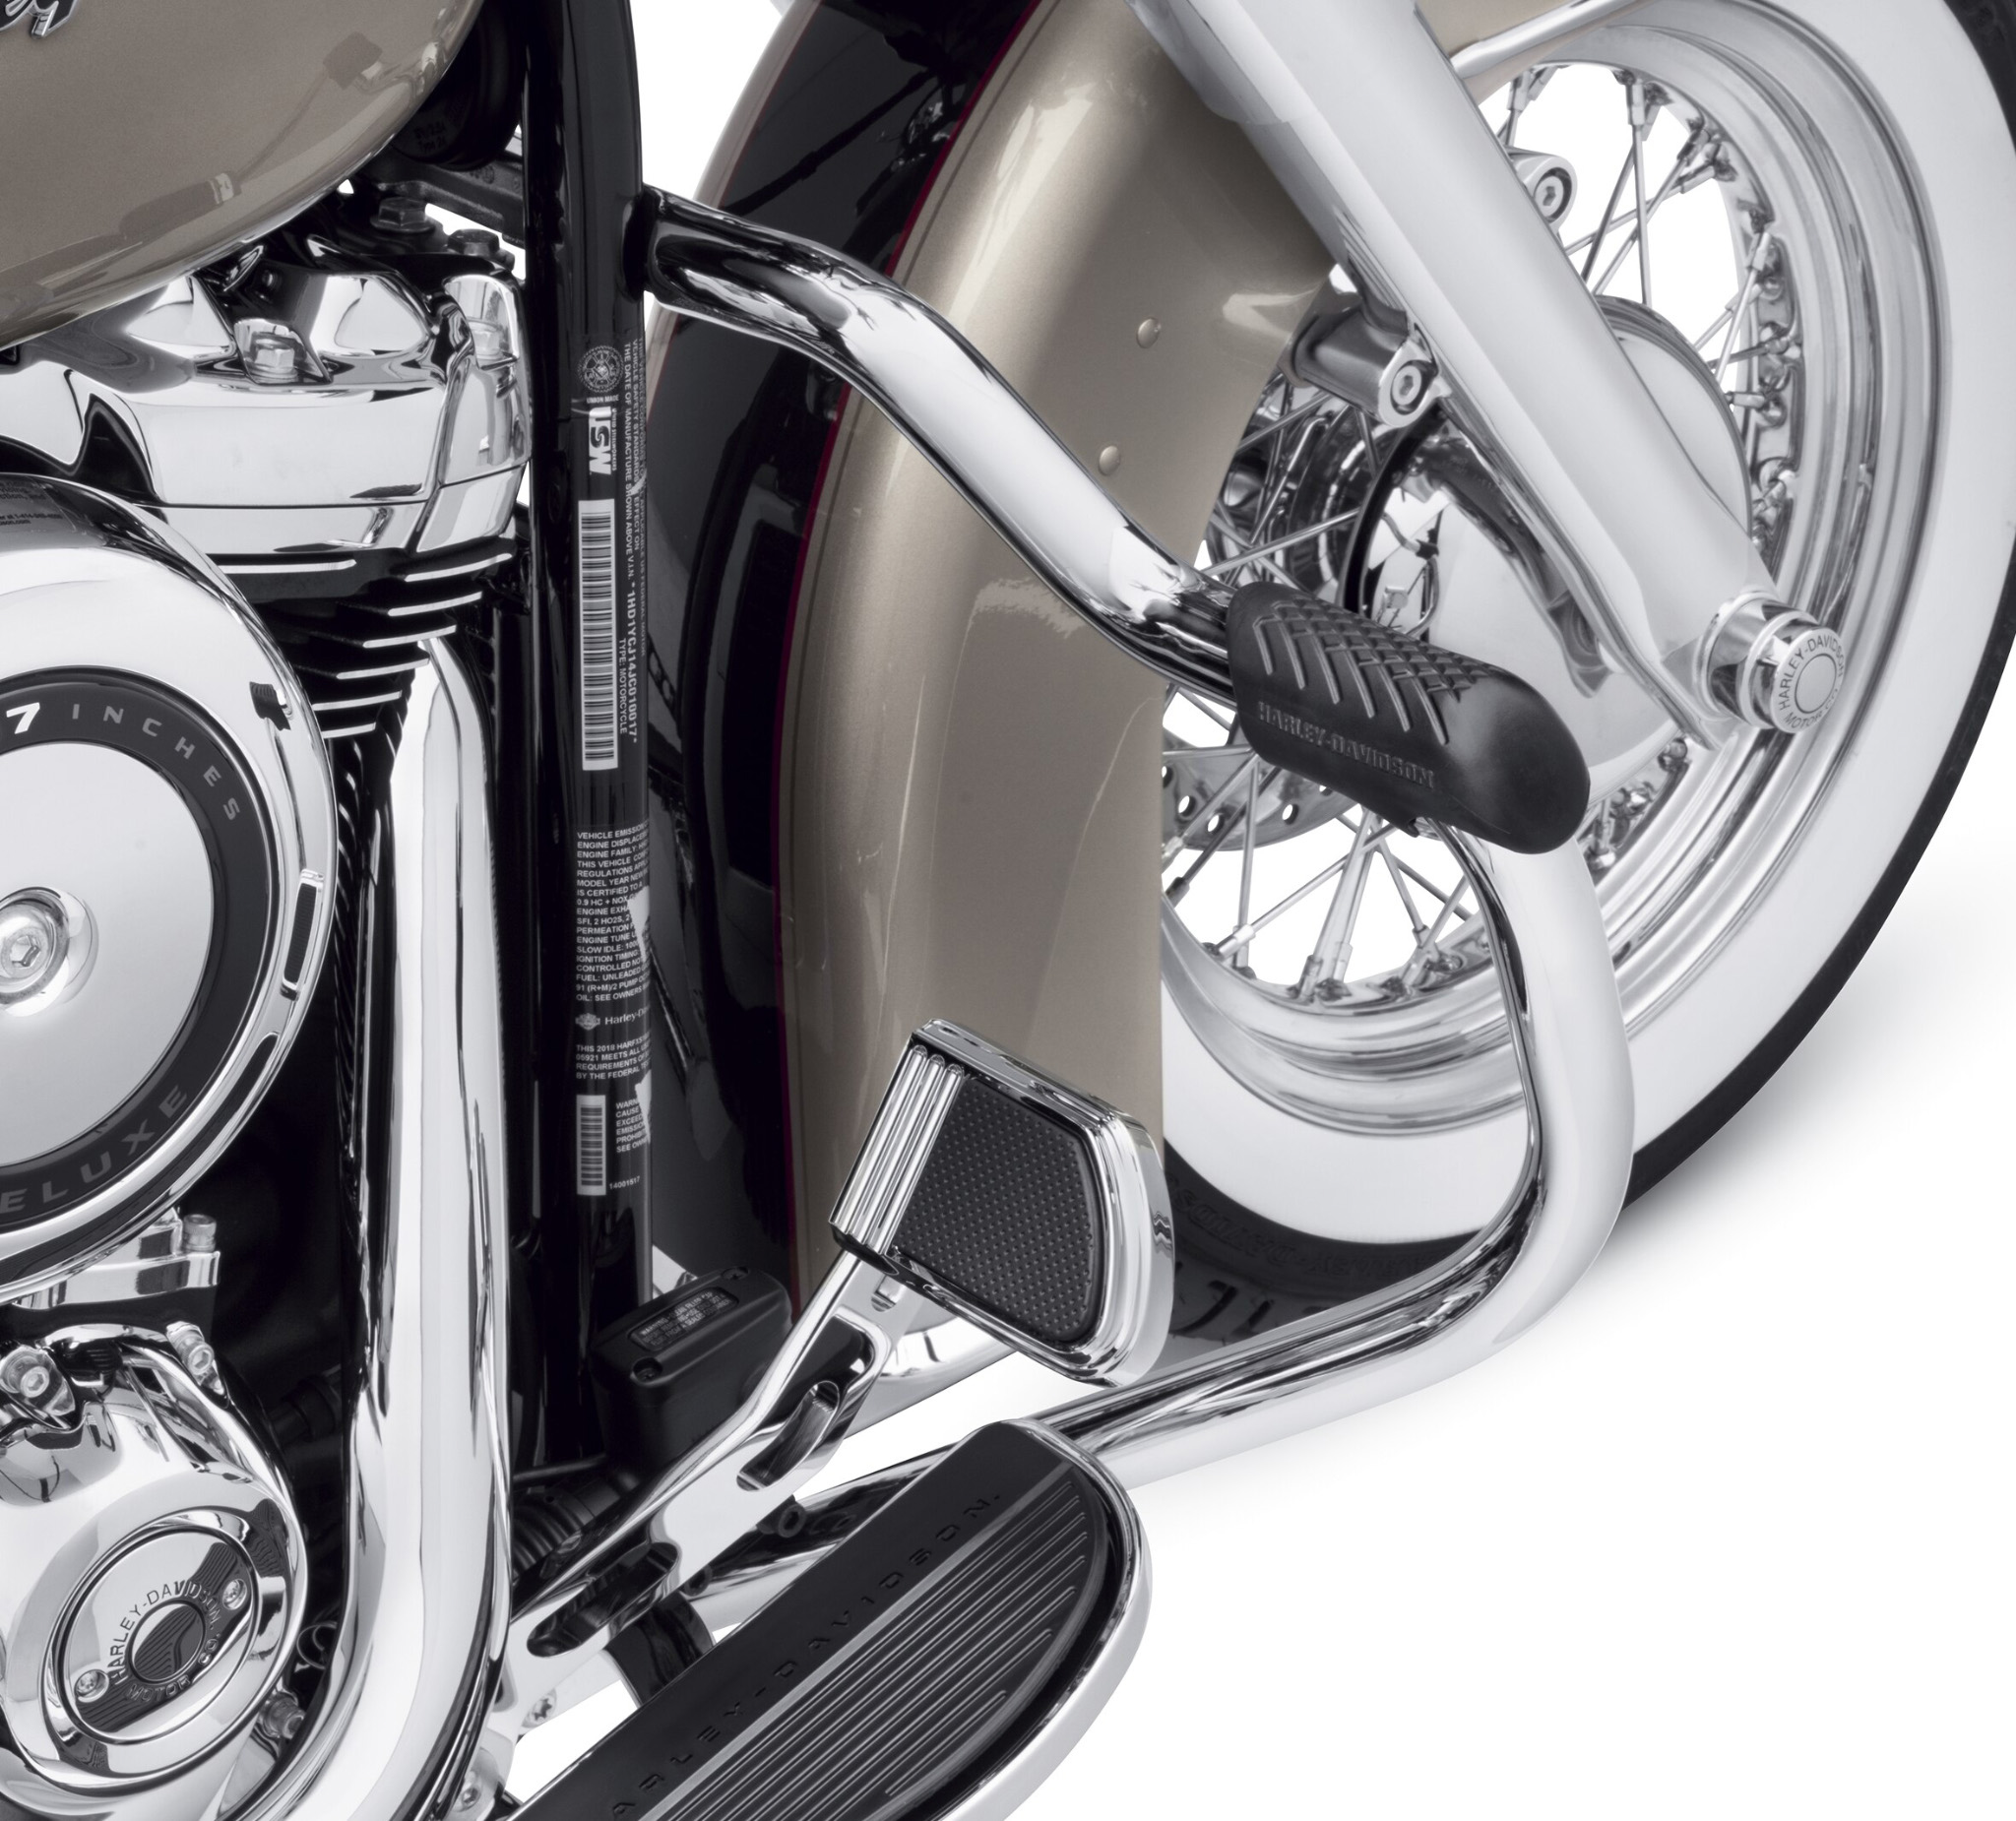 Harley Davidson Softail Fat Boy Deluxe Heritage Chrome Engine Guard Crash Bar